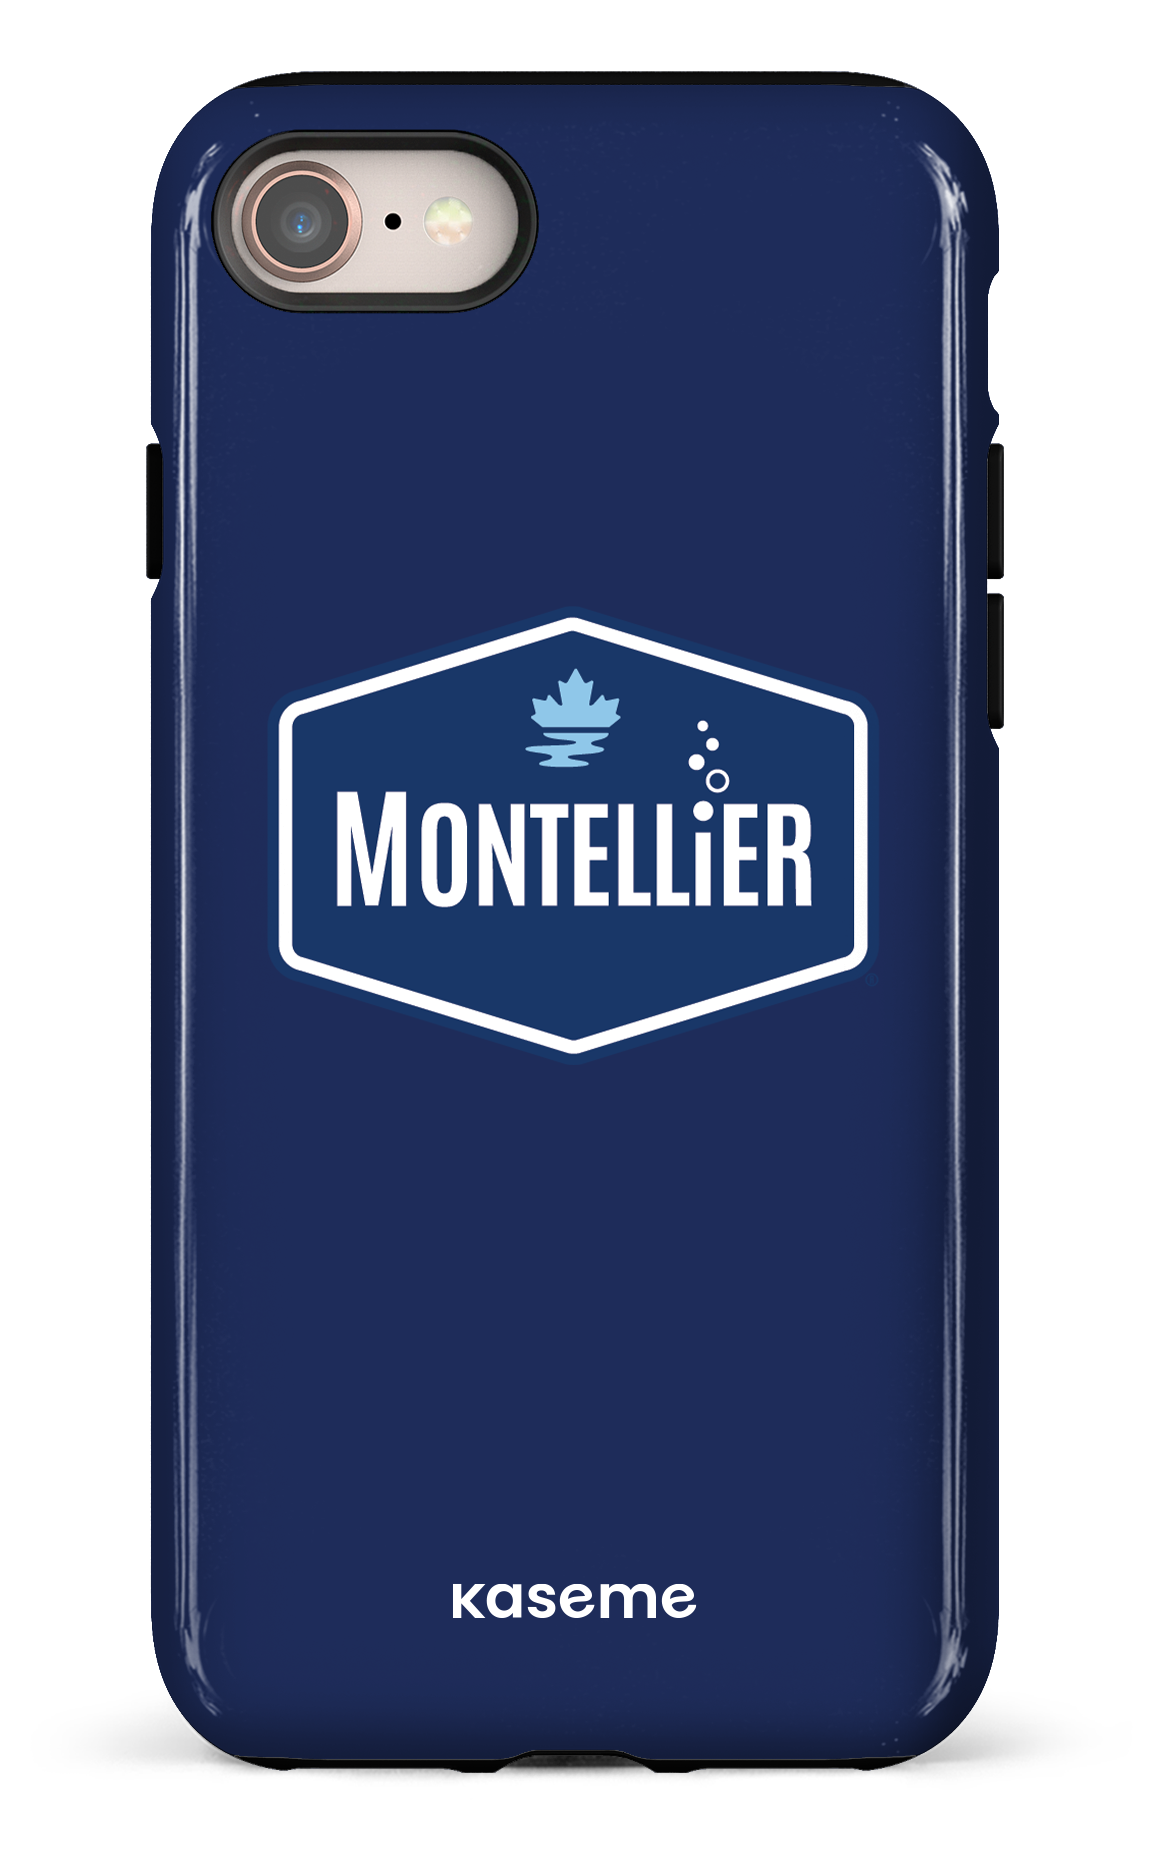 Montellier - iPhone 8